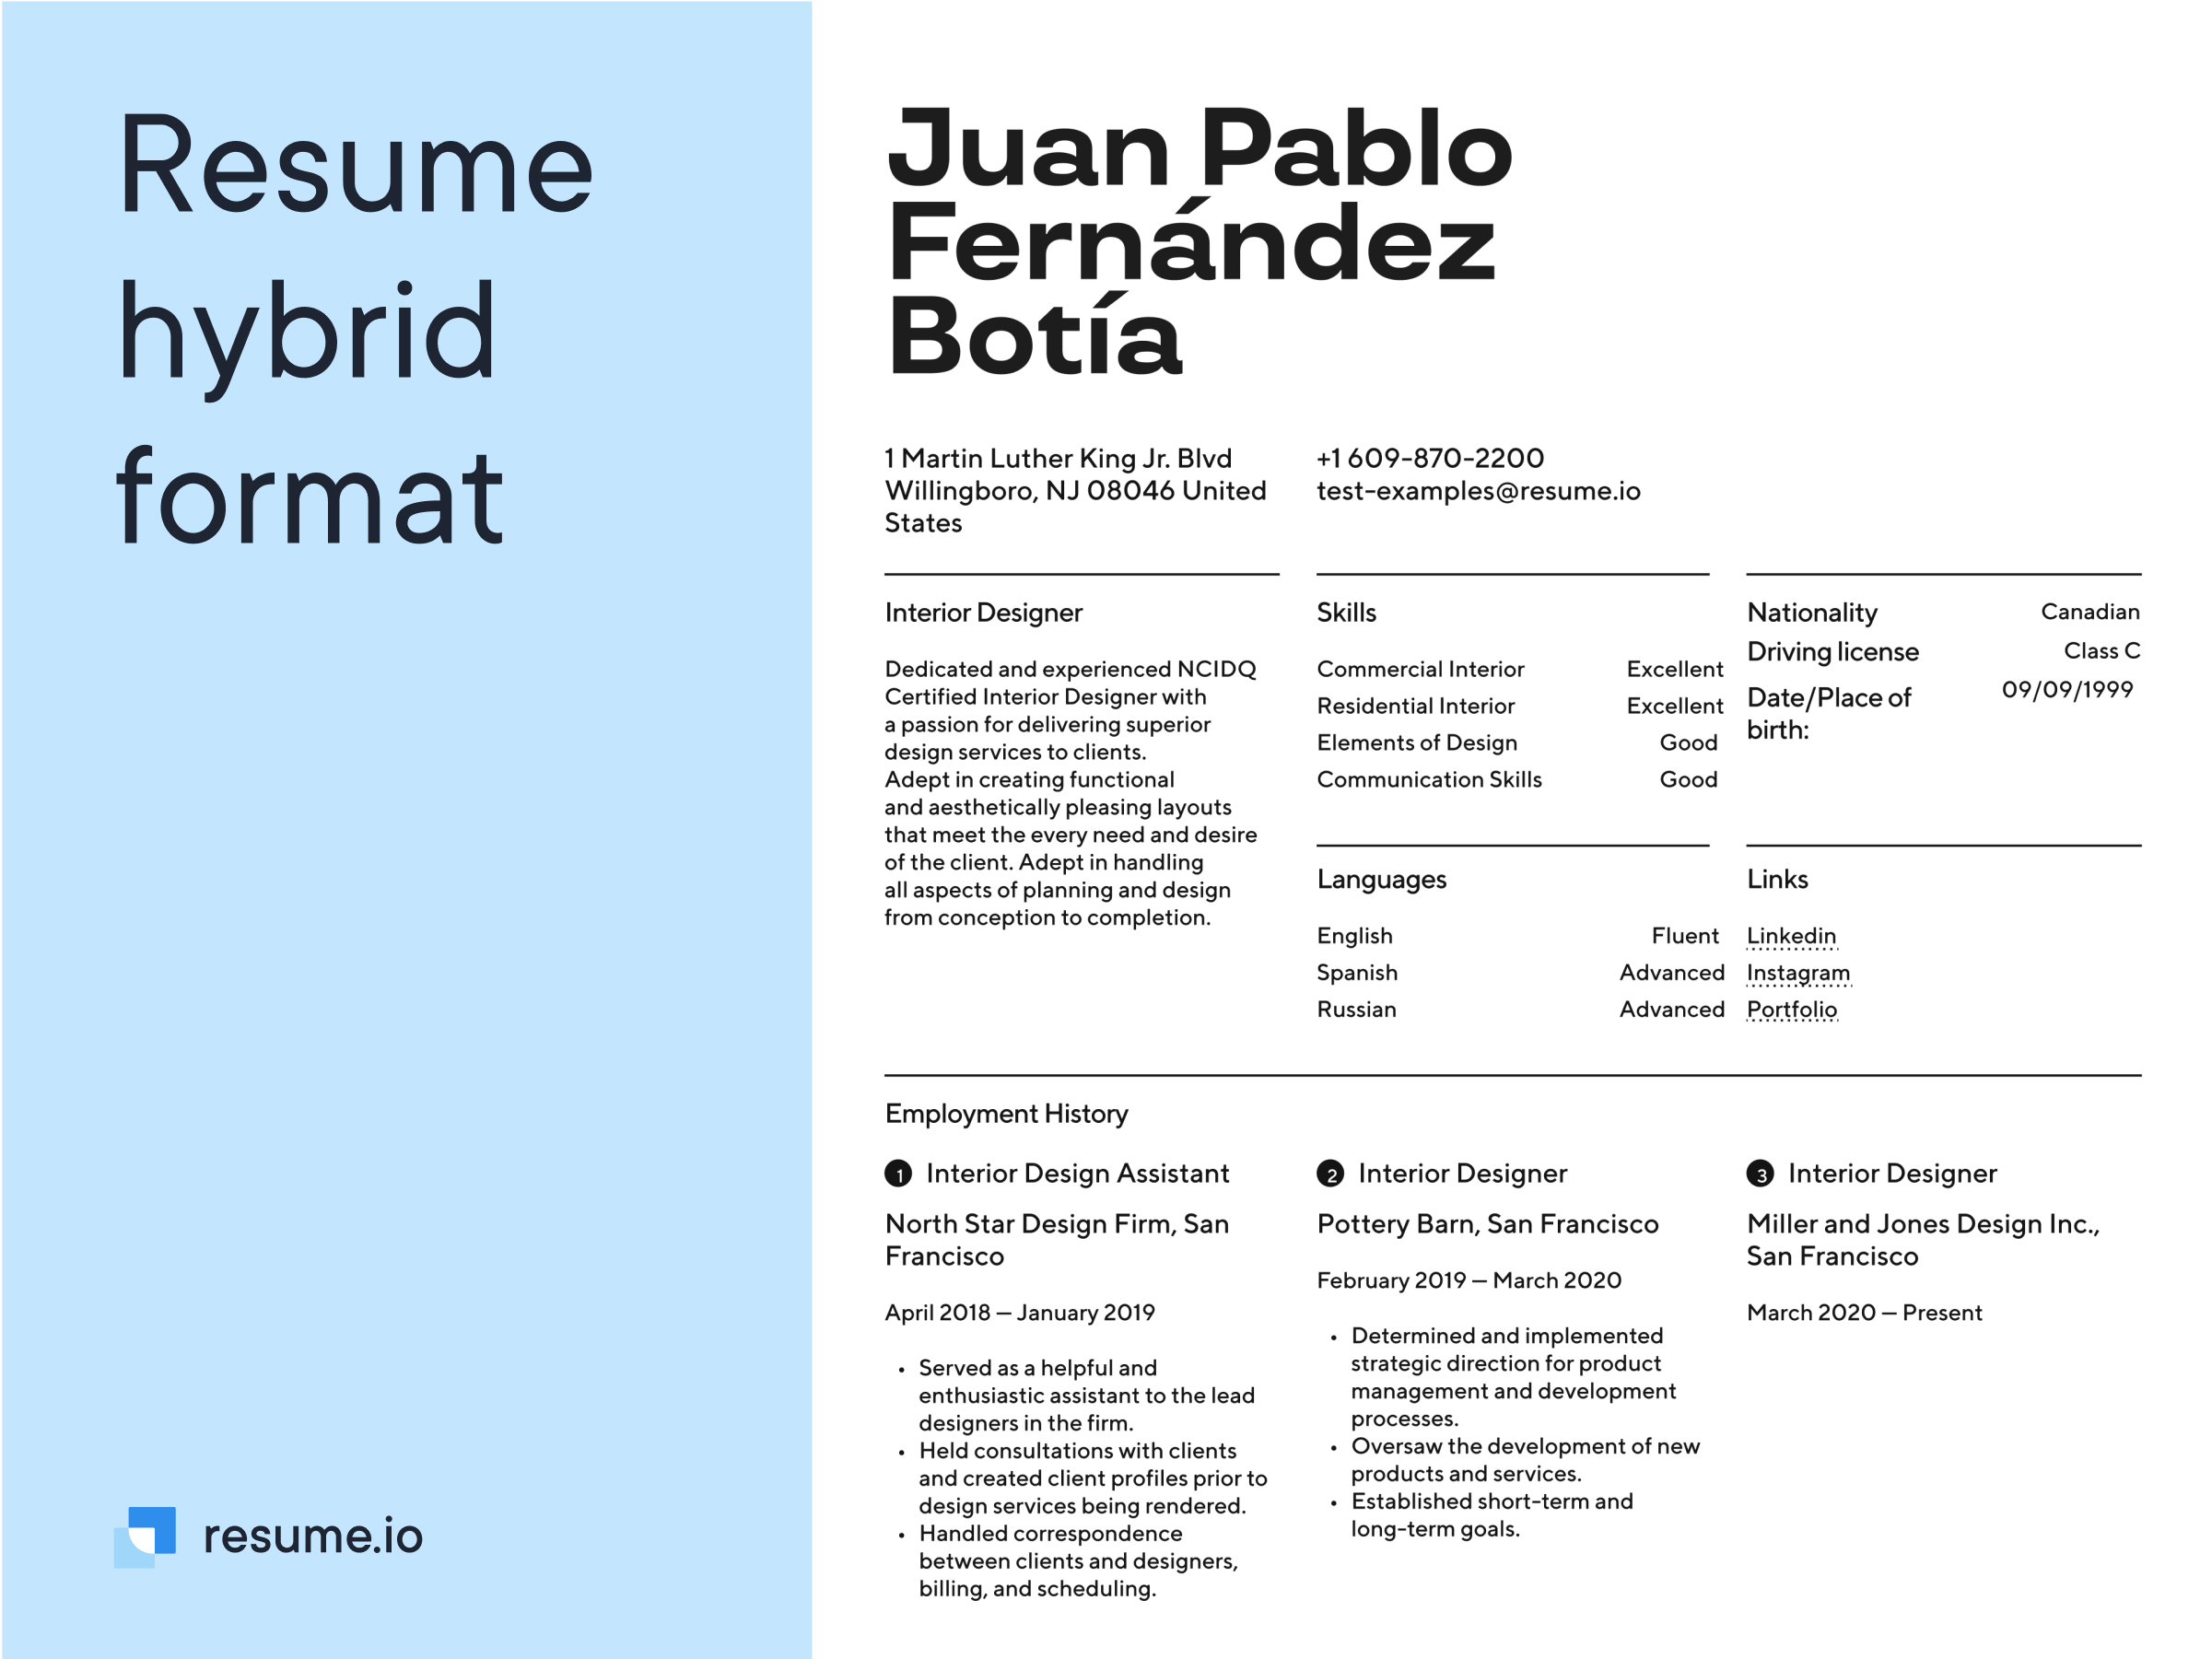 Blue resume hybrid format